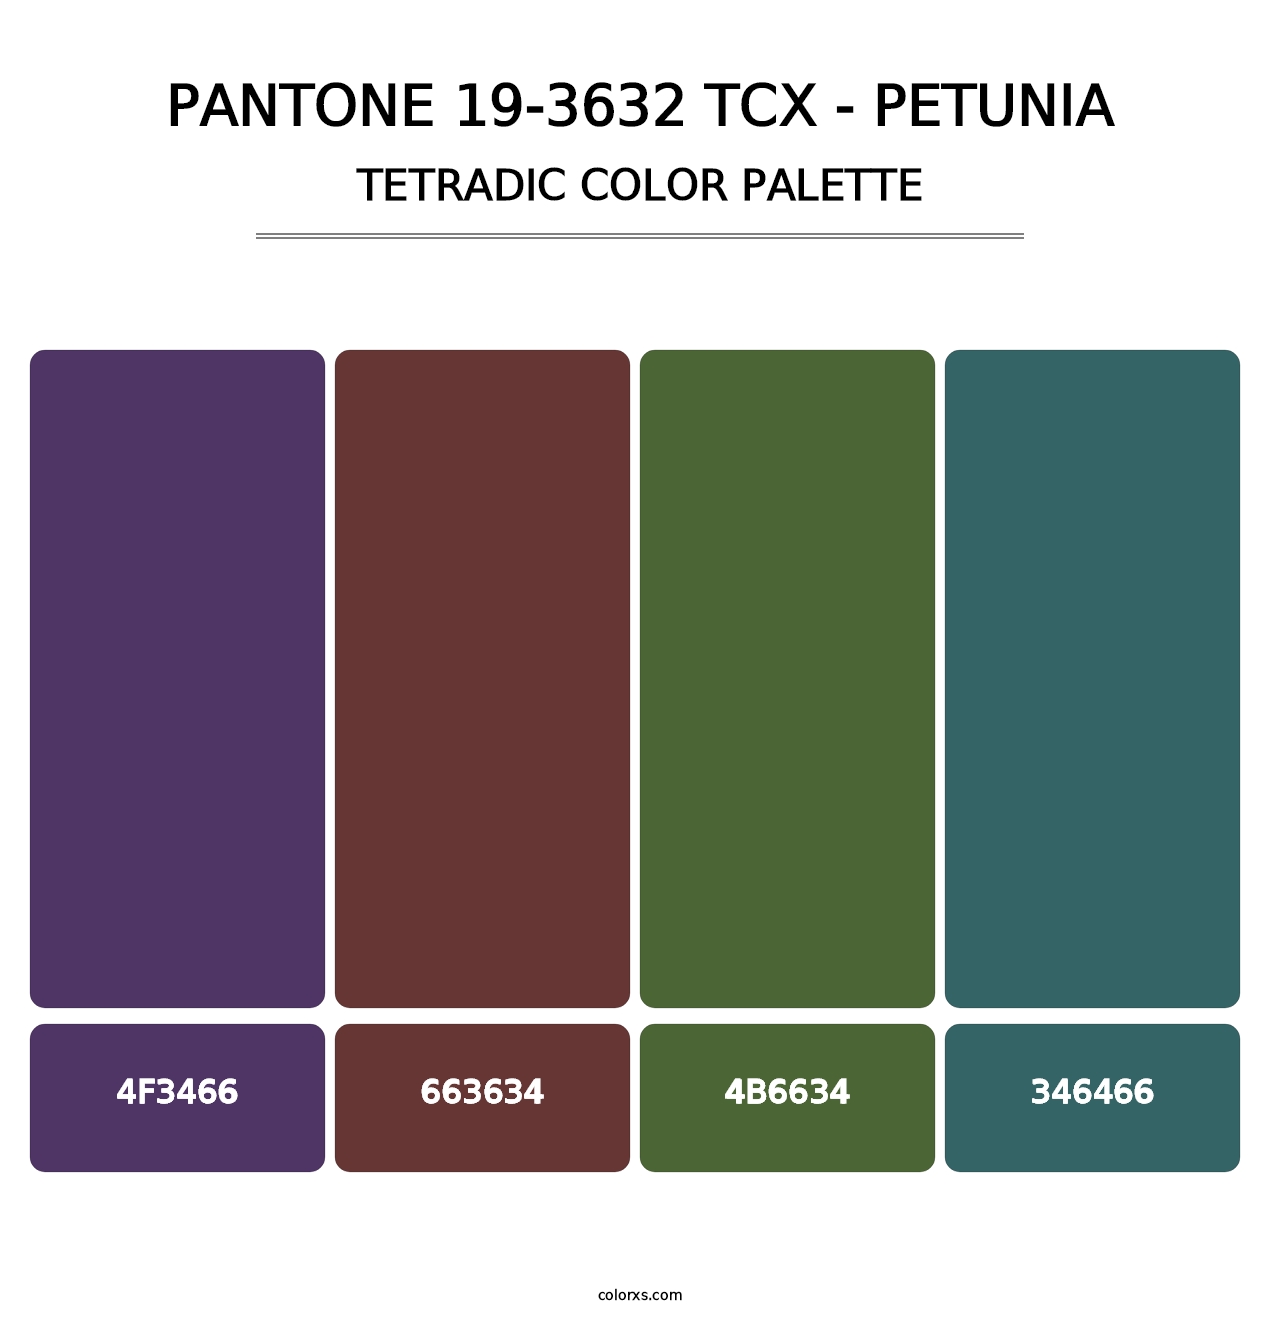 PANTONE 19-3632 TCX - Petunia - Tetradic Color Palette